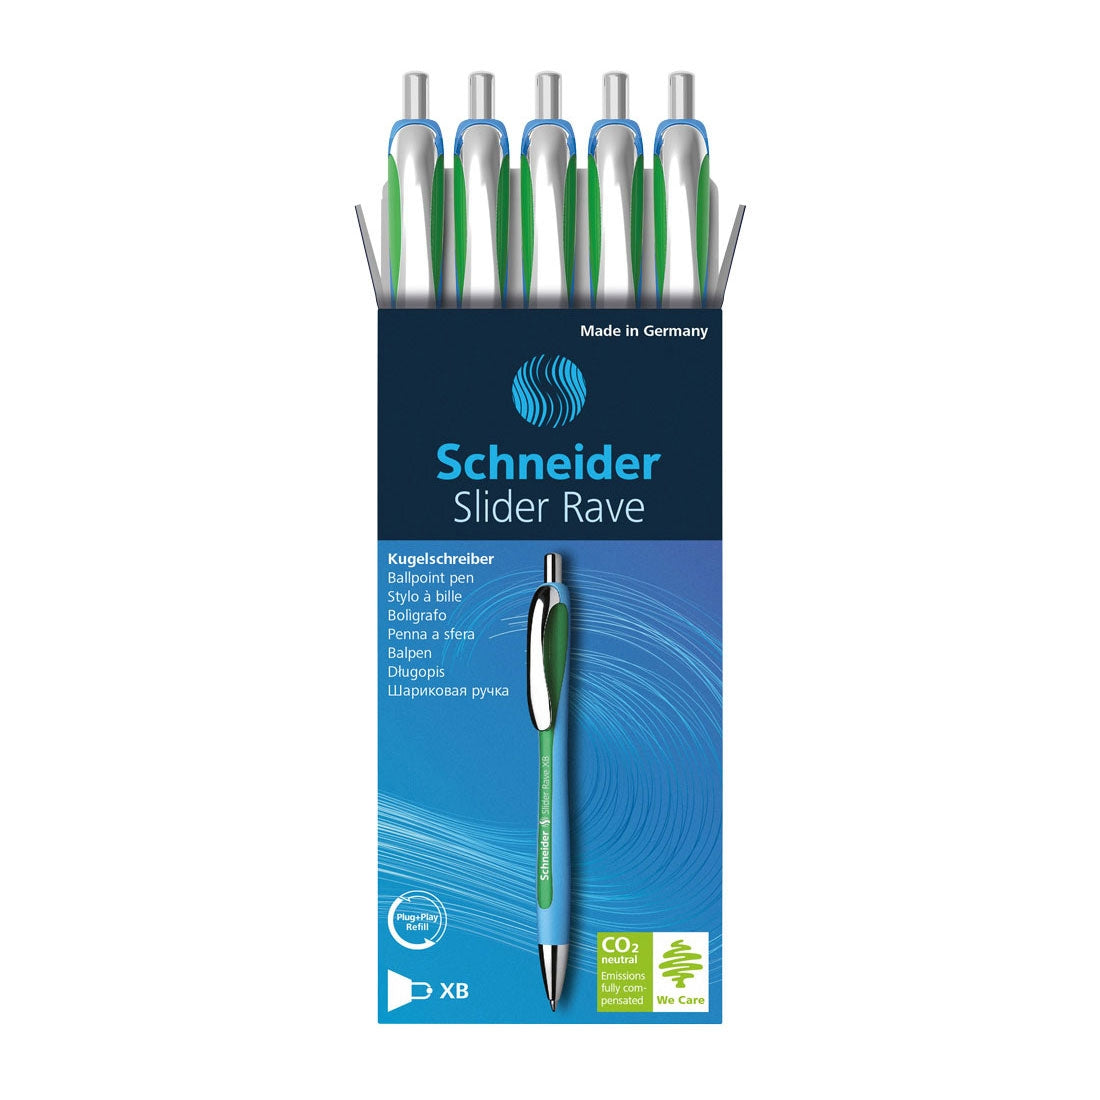 Rave Ballpoint Pens XB, Box of 5 units@colour_green